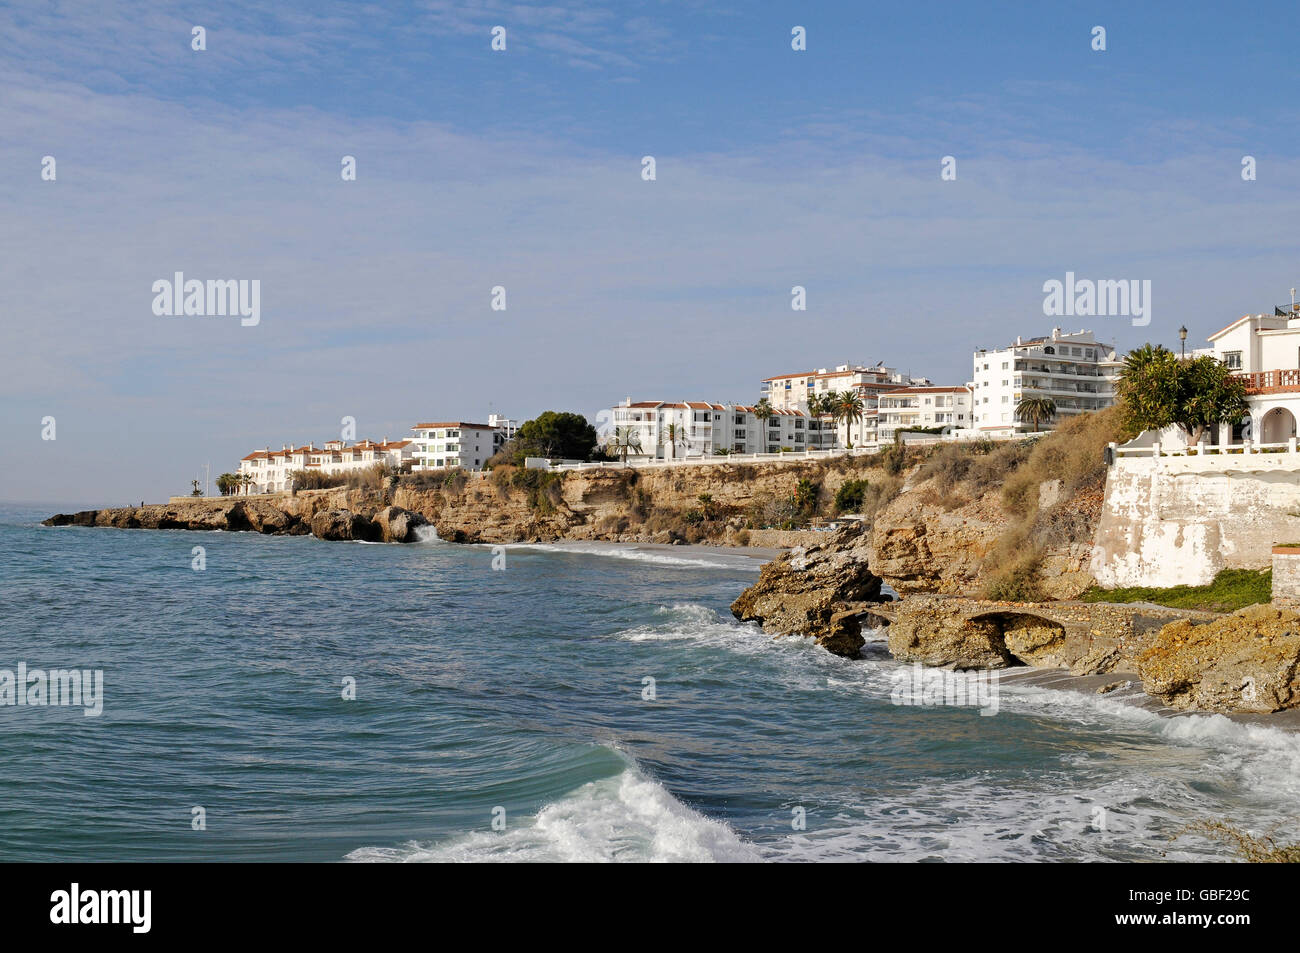 Playa El Salon, beach, Nerja, Malaga Province, Costa del Sol, Andalusia, Spain, Europe Stock Photo